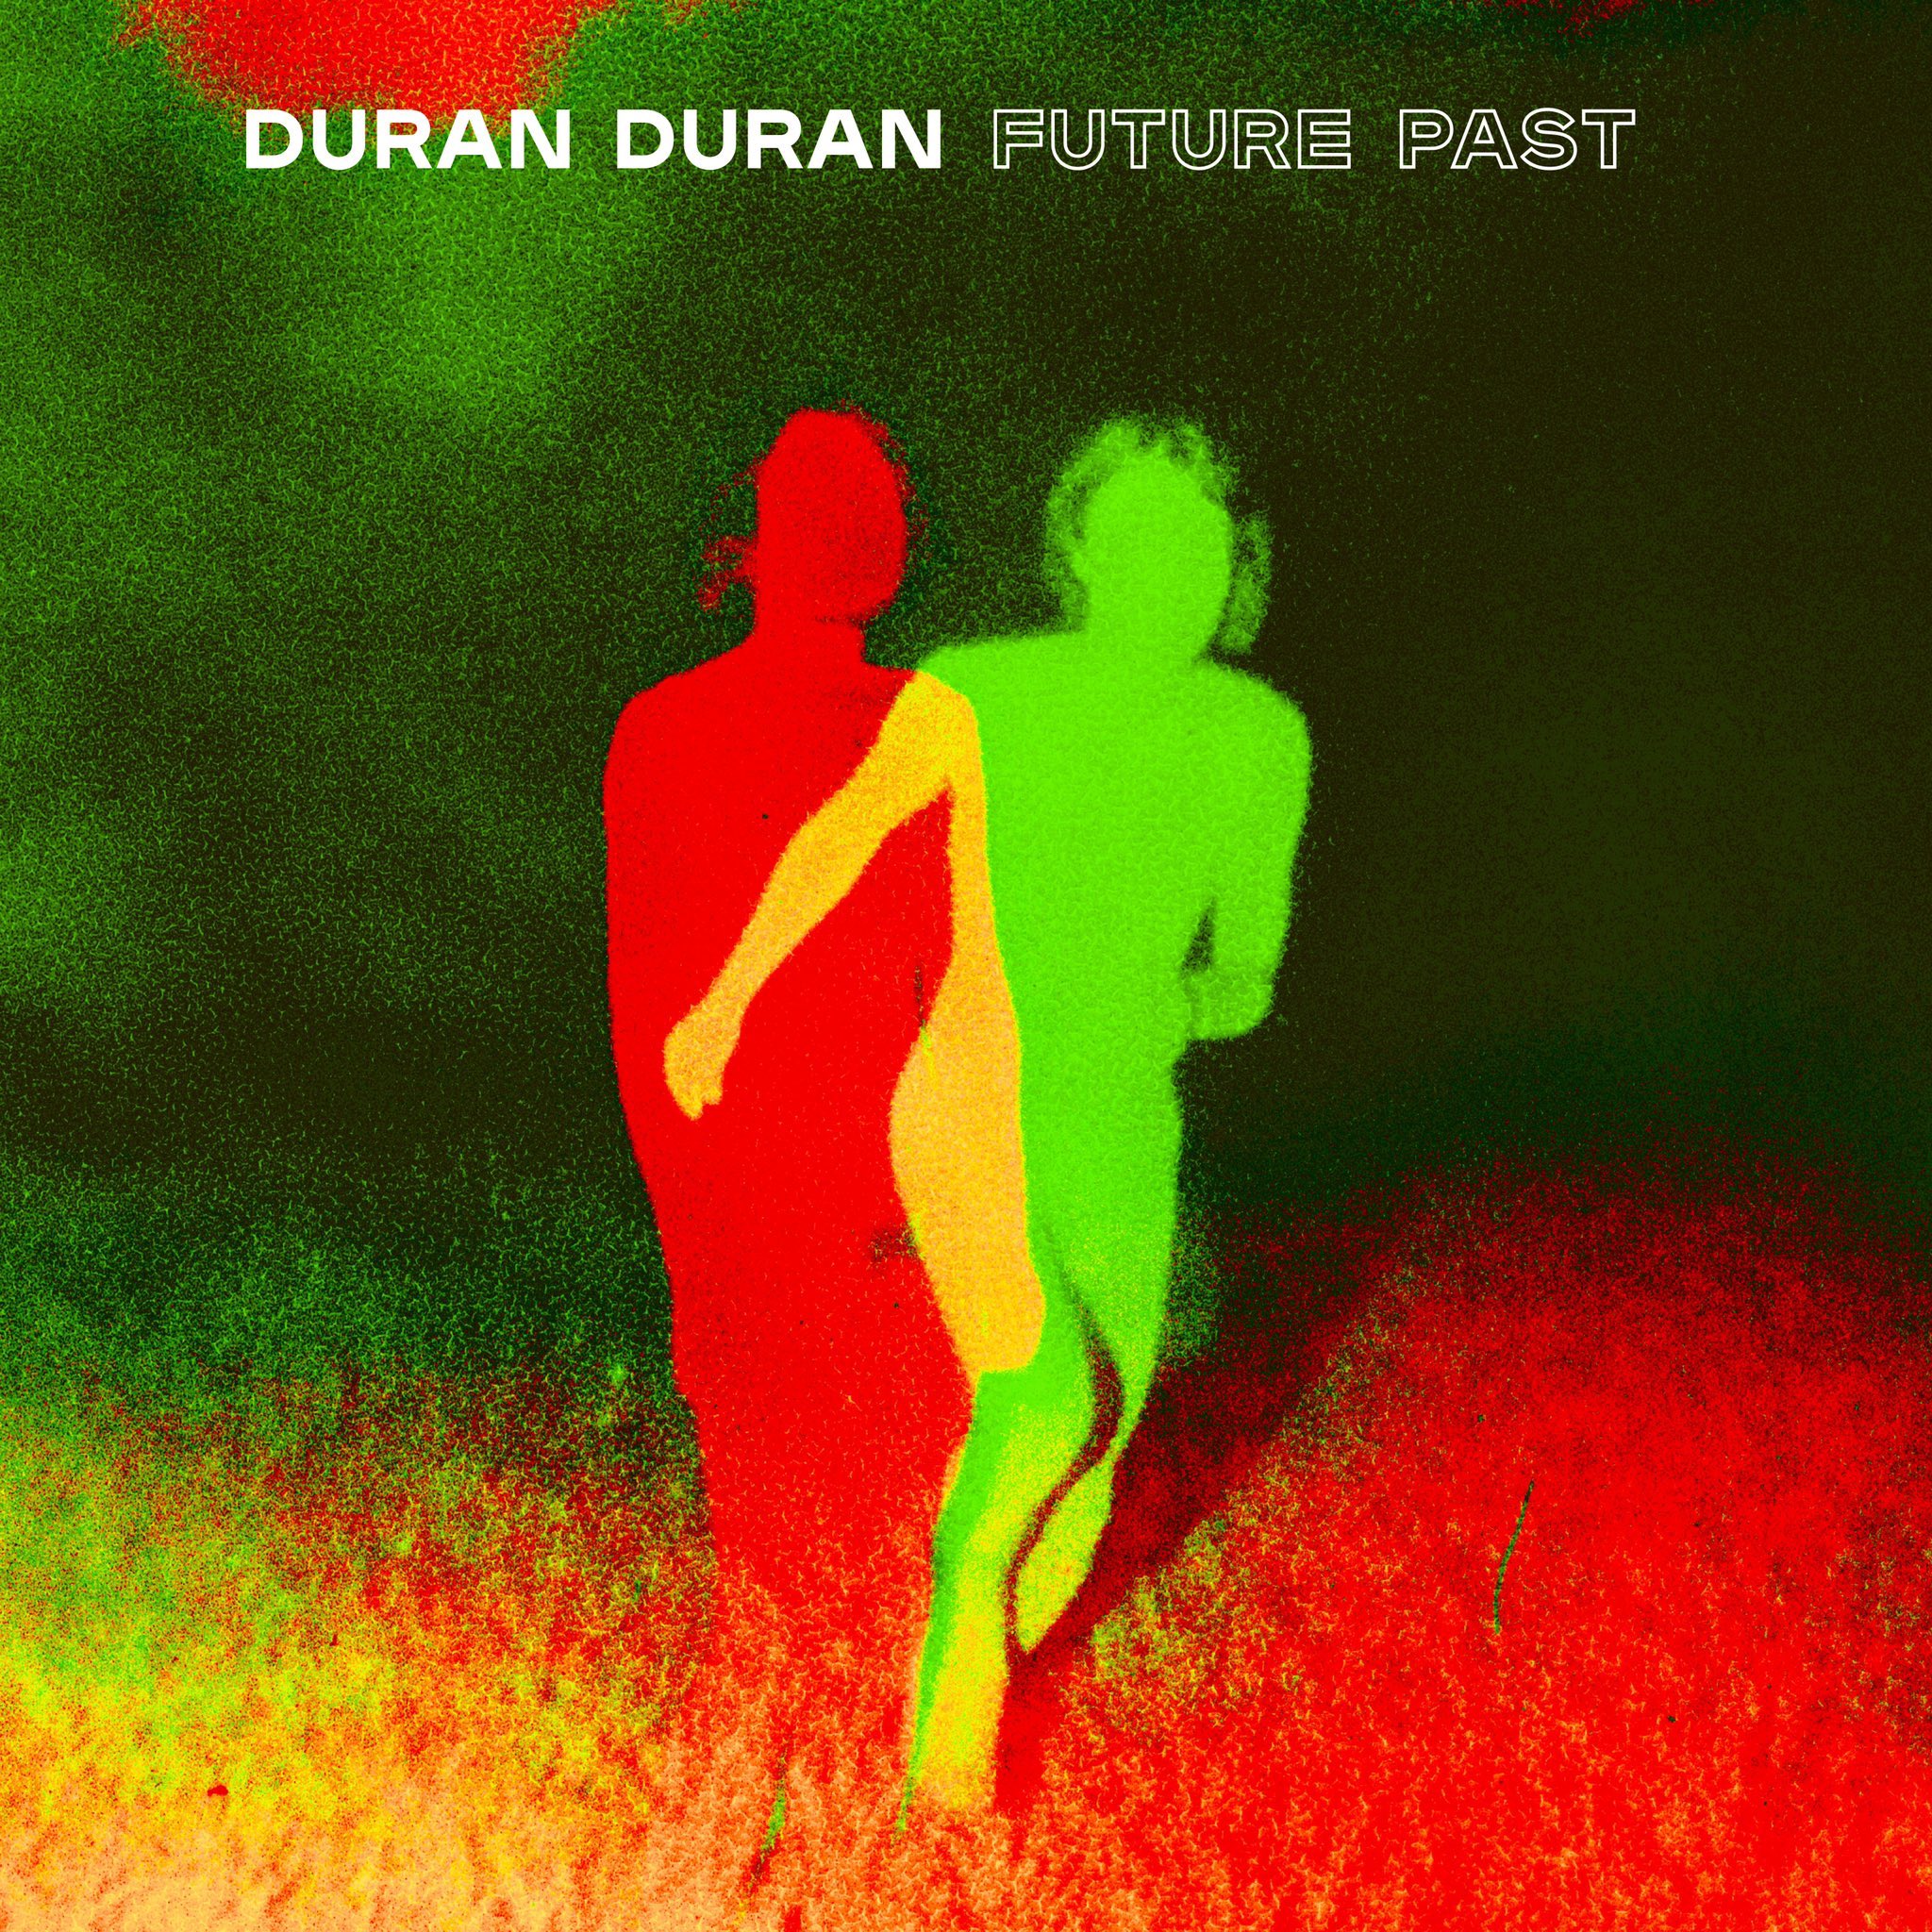 Pre-order Duran Duran's new album, 'Future Past' – SuperDeluxeEdition